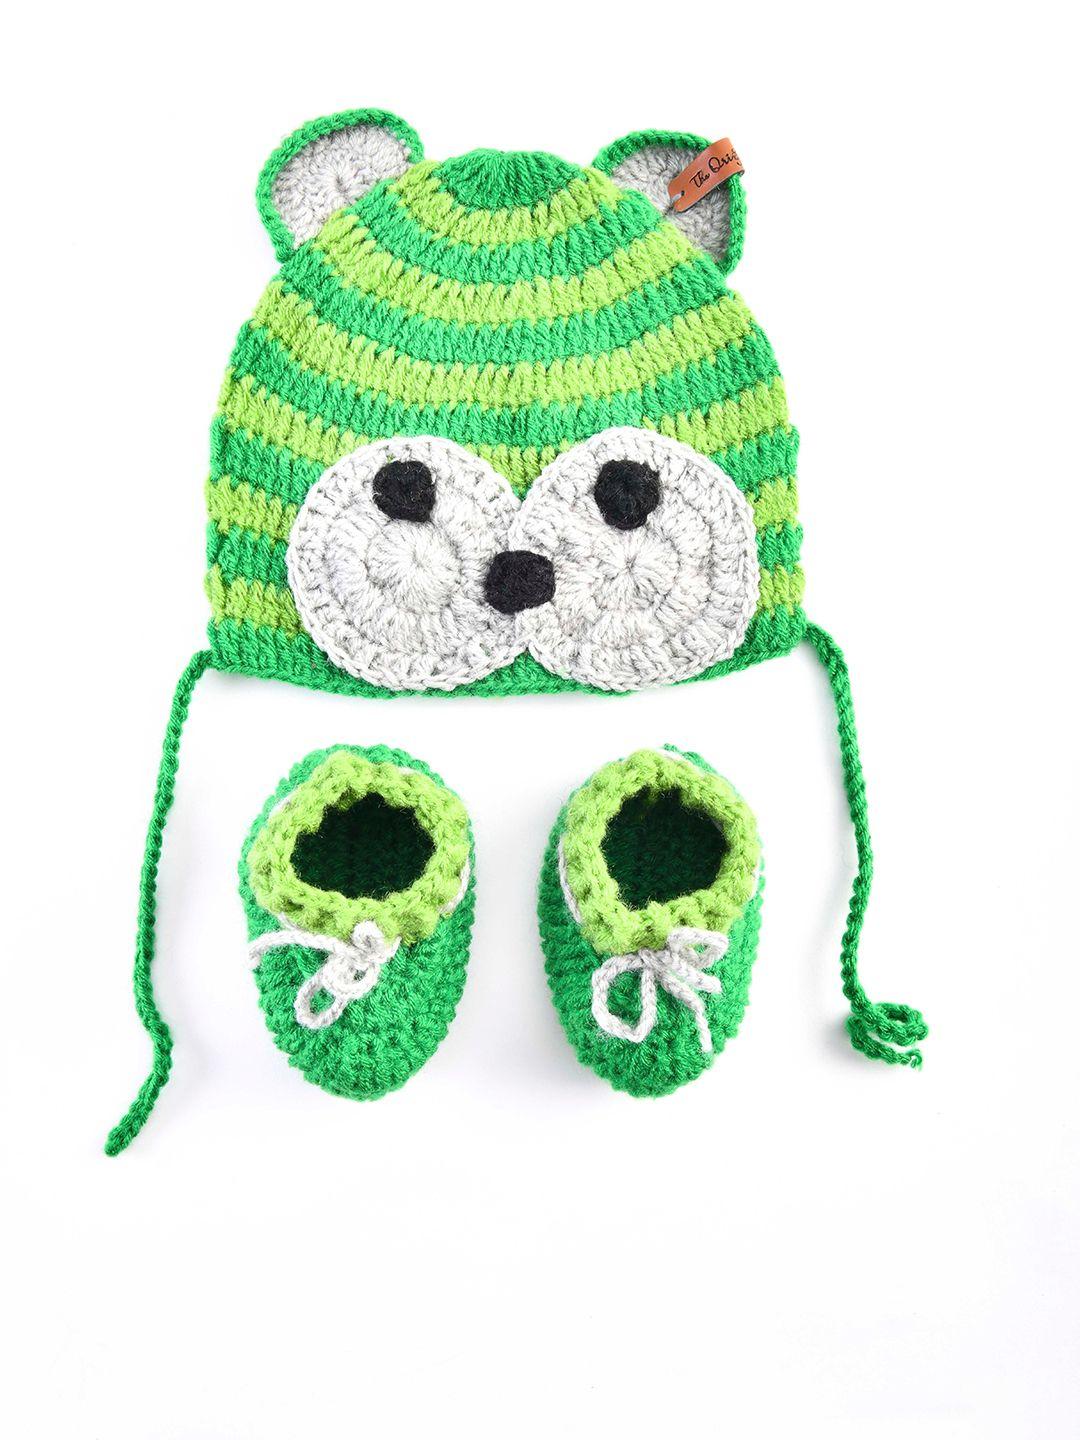 the original knit unisex kids green & white colourblocked beanie with socks